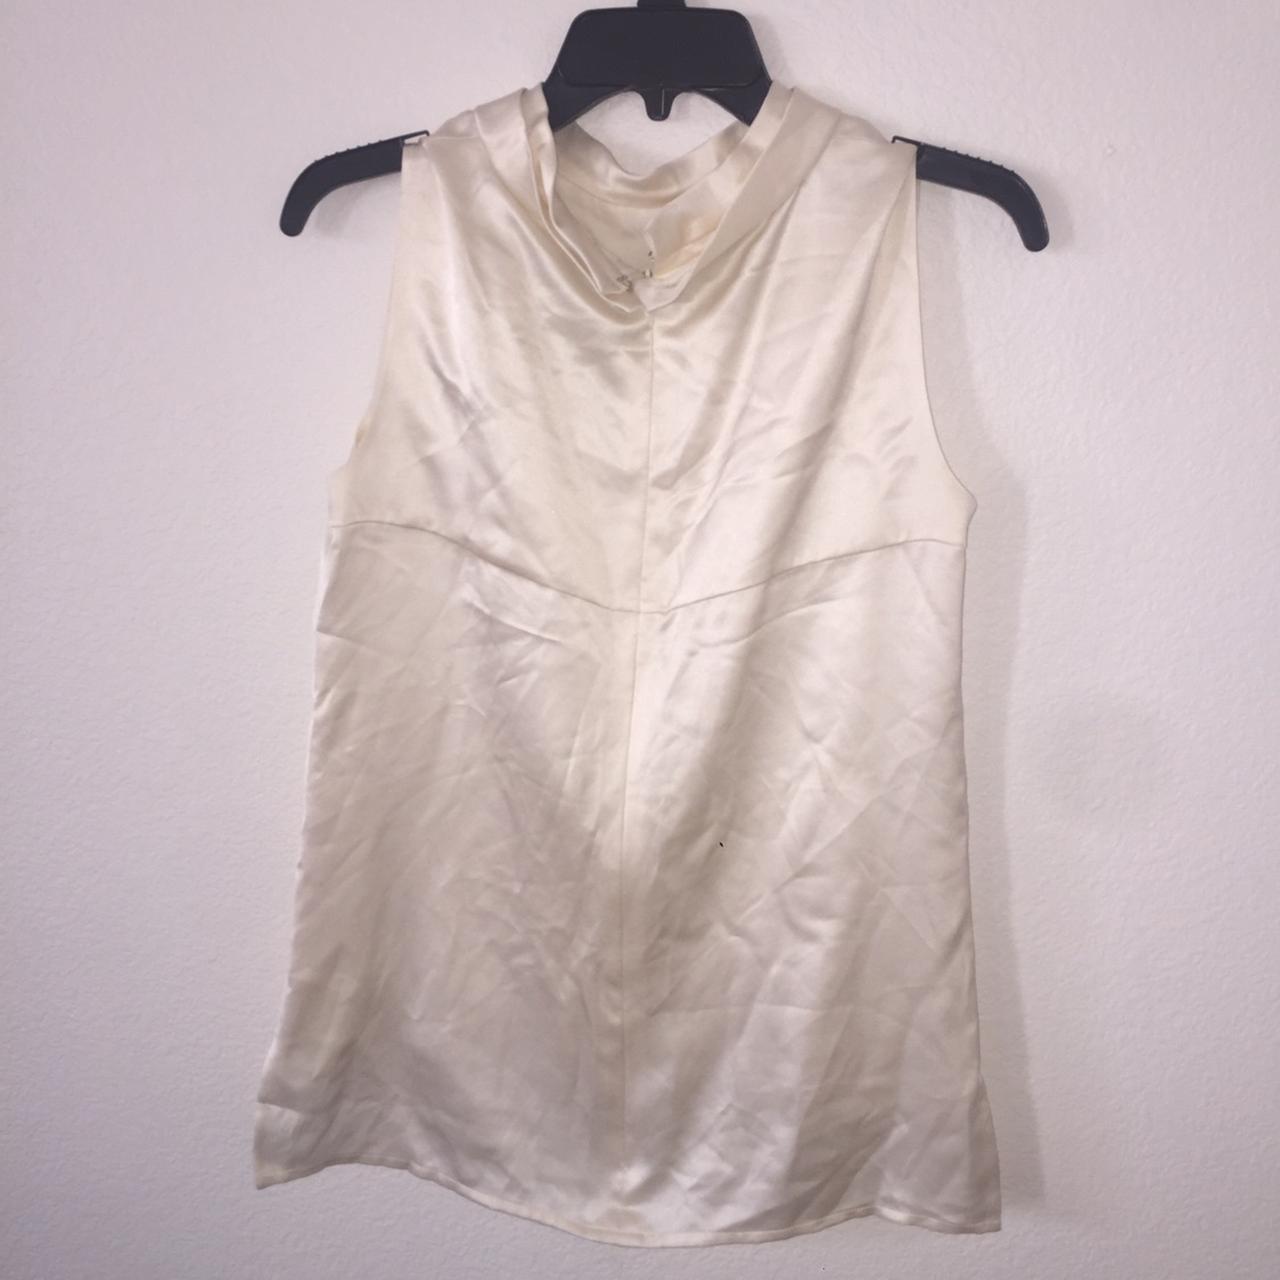 Chanel vintage silk women’s shirt. Button down